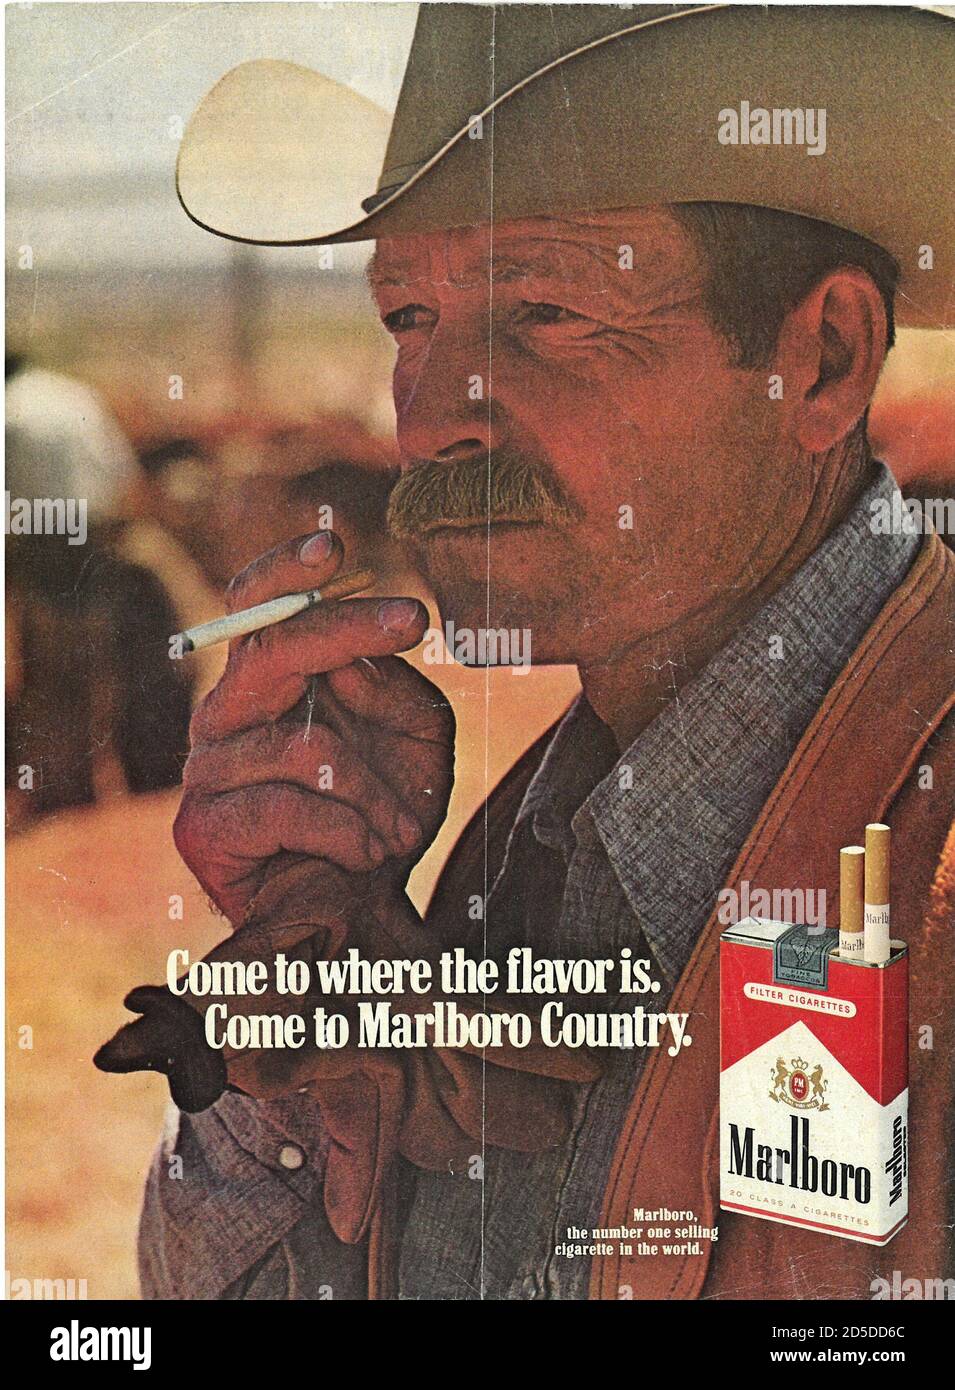 Marlboro Man Ads In 1960